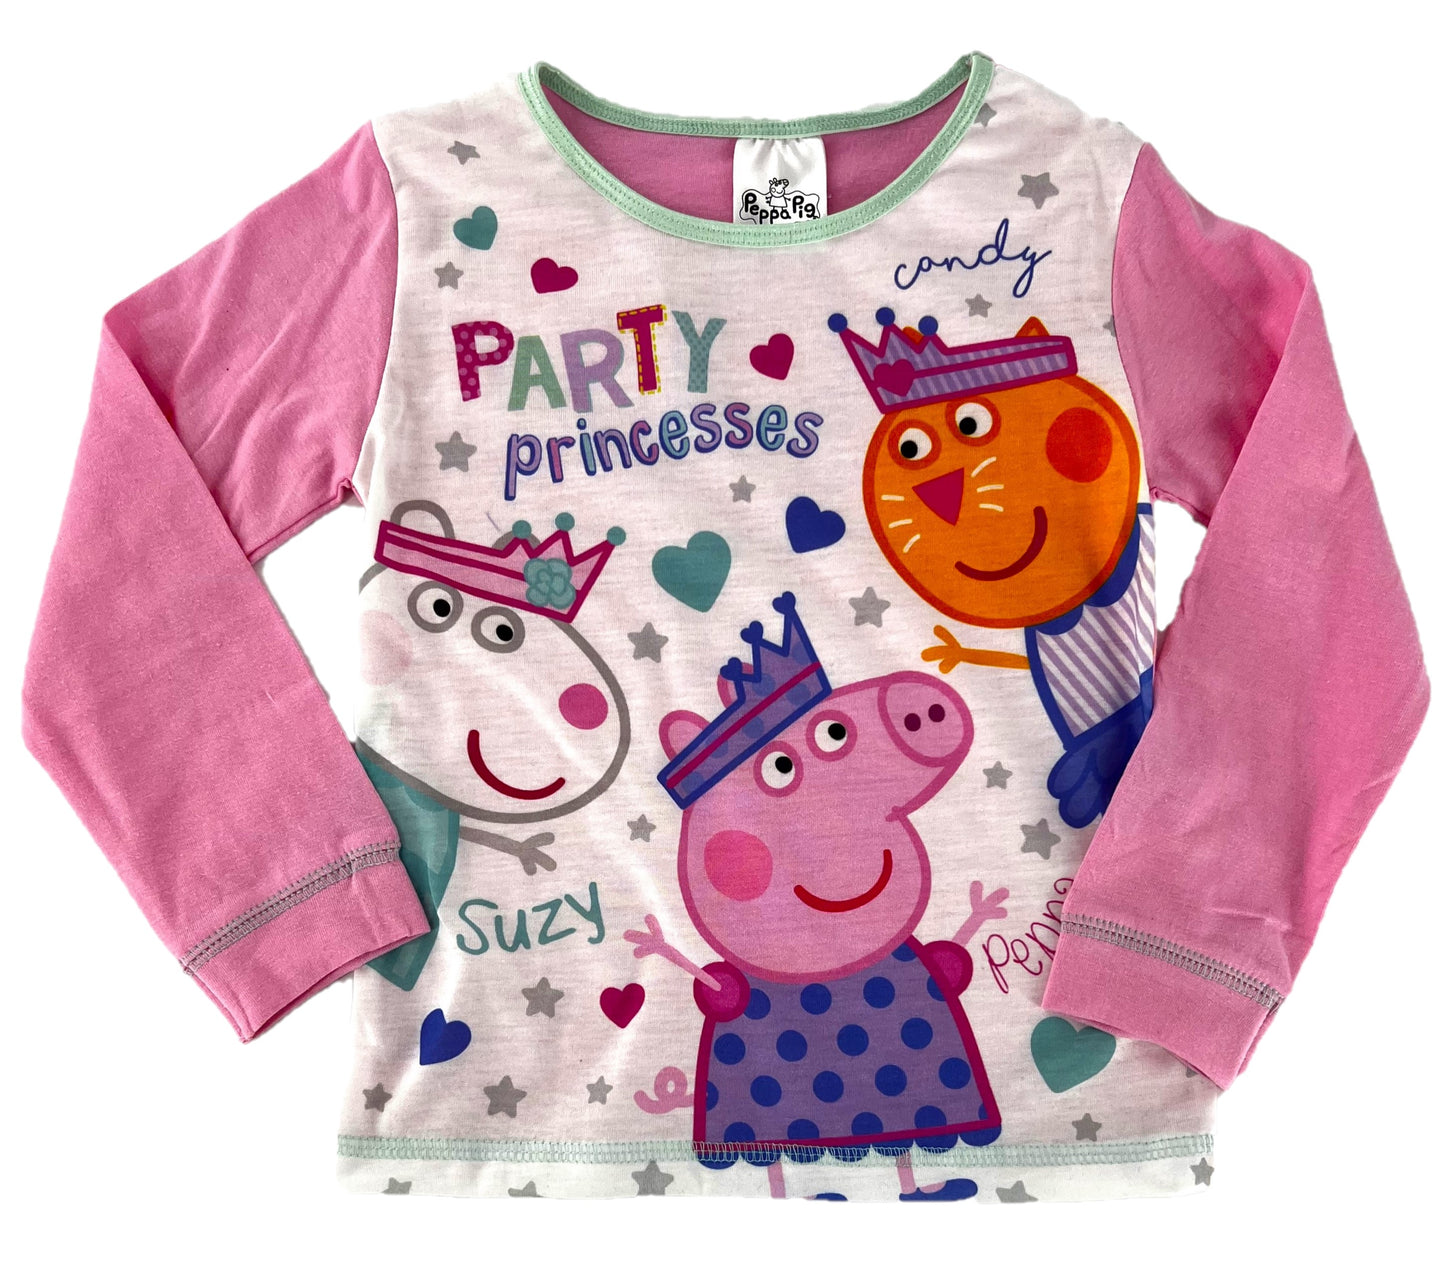 Peppa Pig Girl's Cotton Pyjamas, 1-5 Years, PJ, Sleepwear